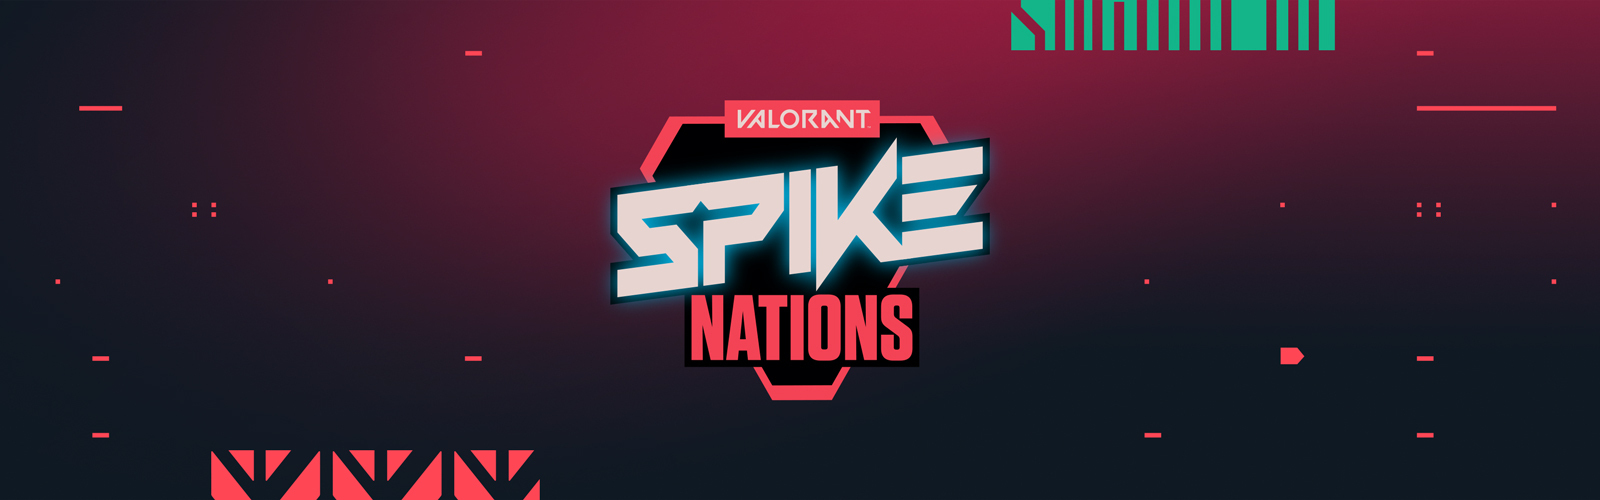 spike nations